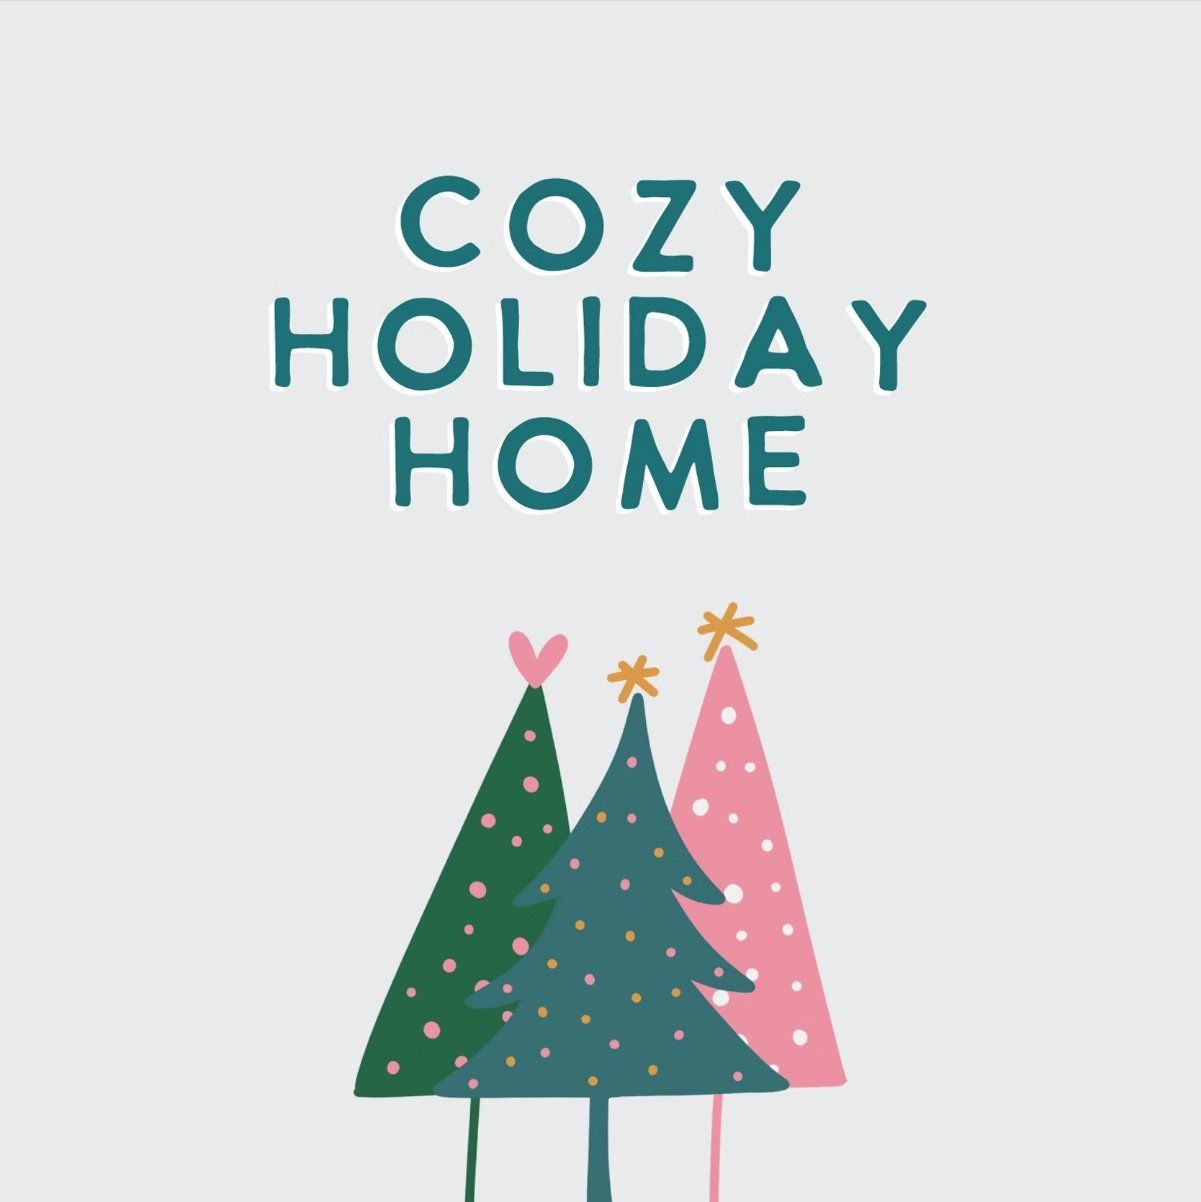 Cozy Holiday Home Ideas